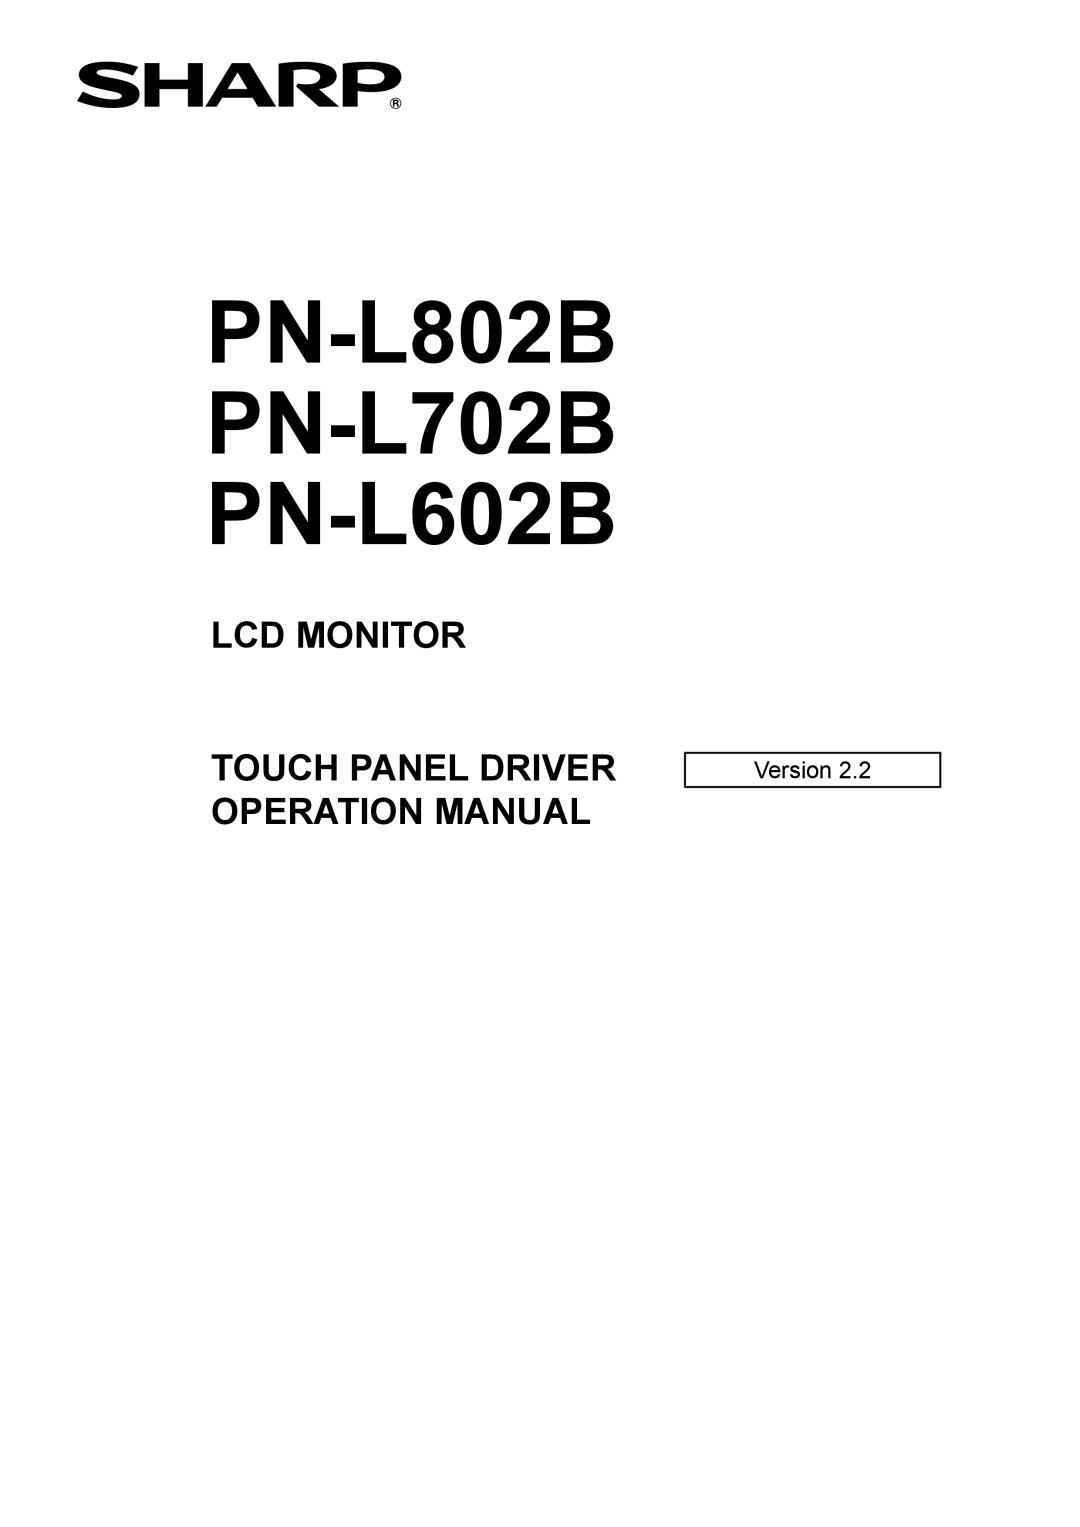 Sharp PNL802B operation manual PN-L802B PN-L702B PN-L602B, Lcd Monitor, Touch Panel Driver Operation Manual, Version 